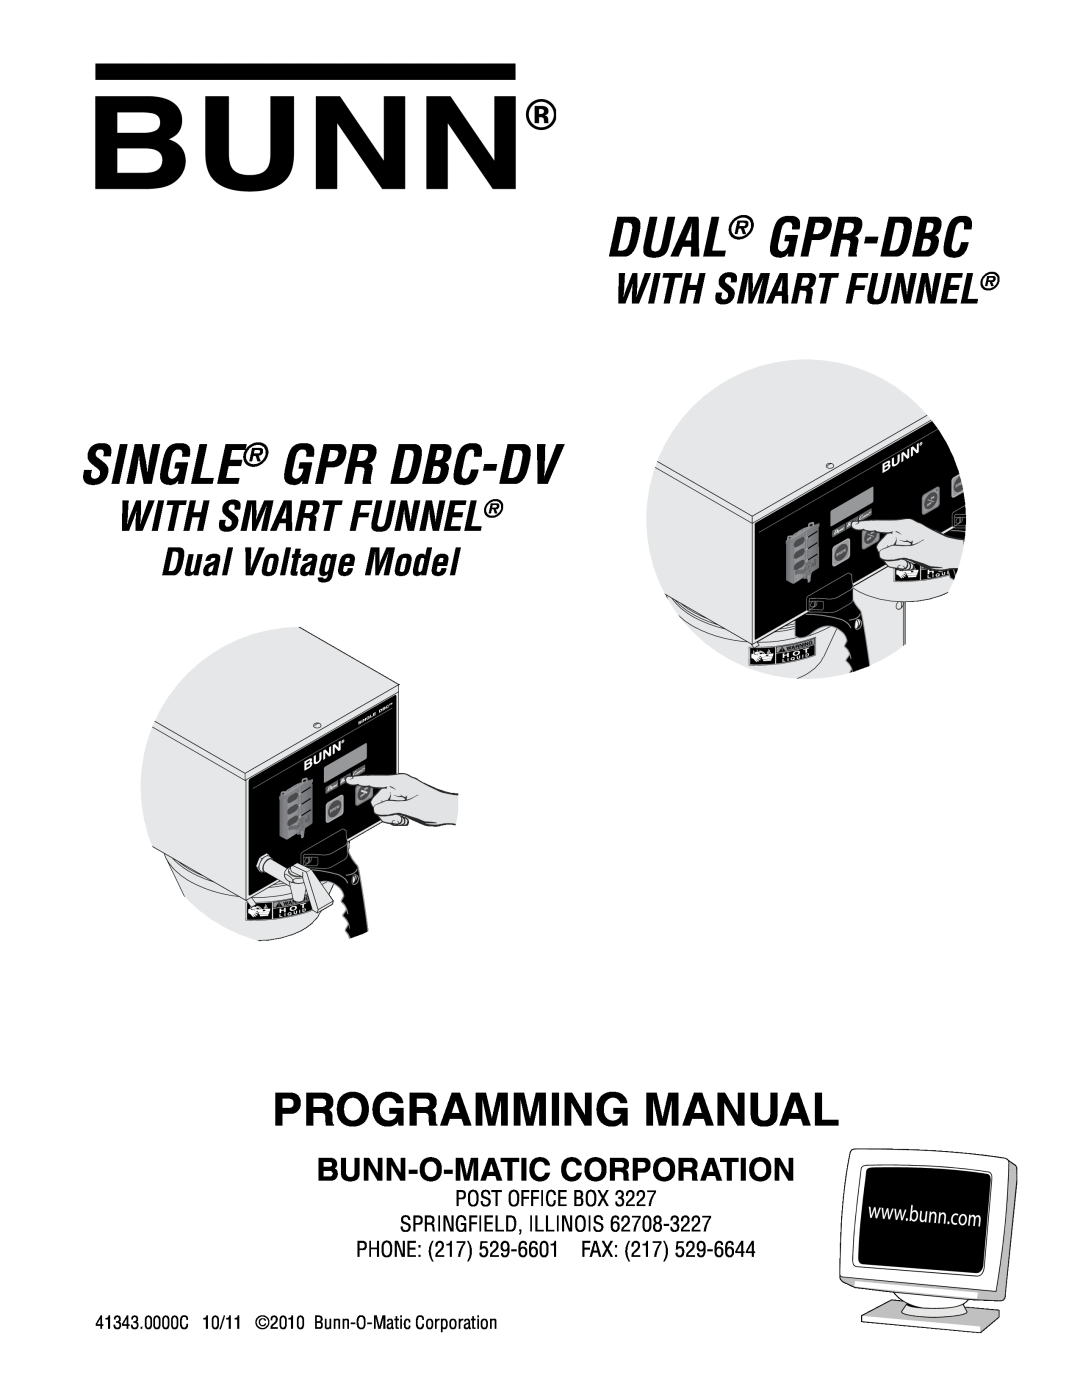 Bunn 41343 manual Dual Gpr-Dbc, Single Gpr Dbc-Dv, Programming Manual, With Smart Funnel, Dual Voltage Model, Empty, Risks 